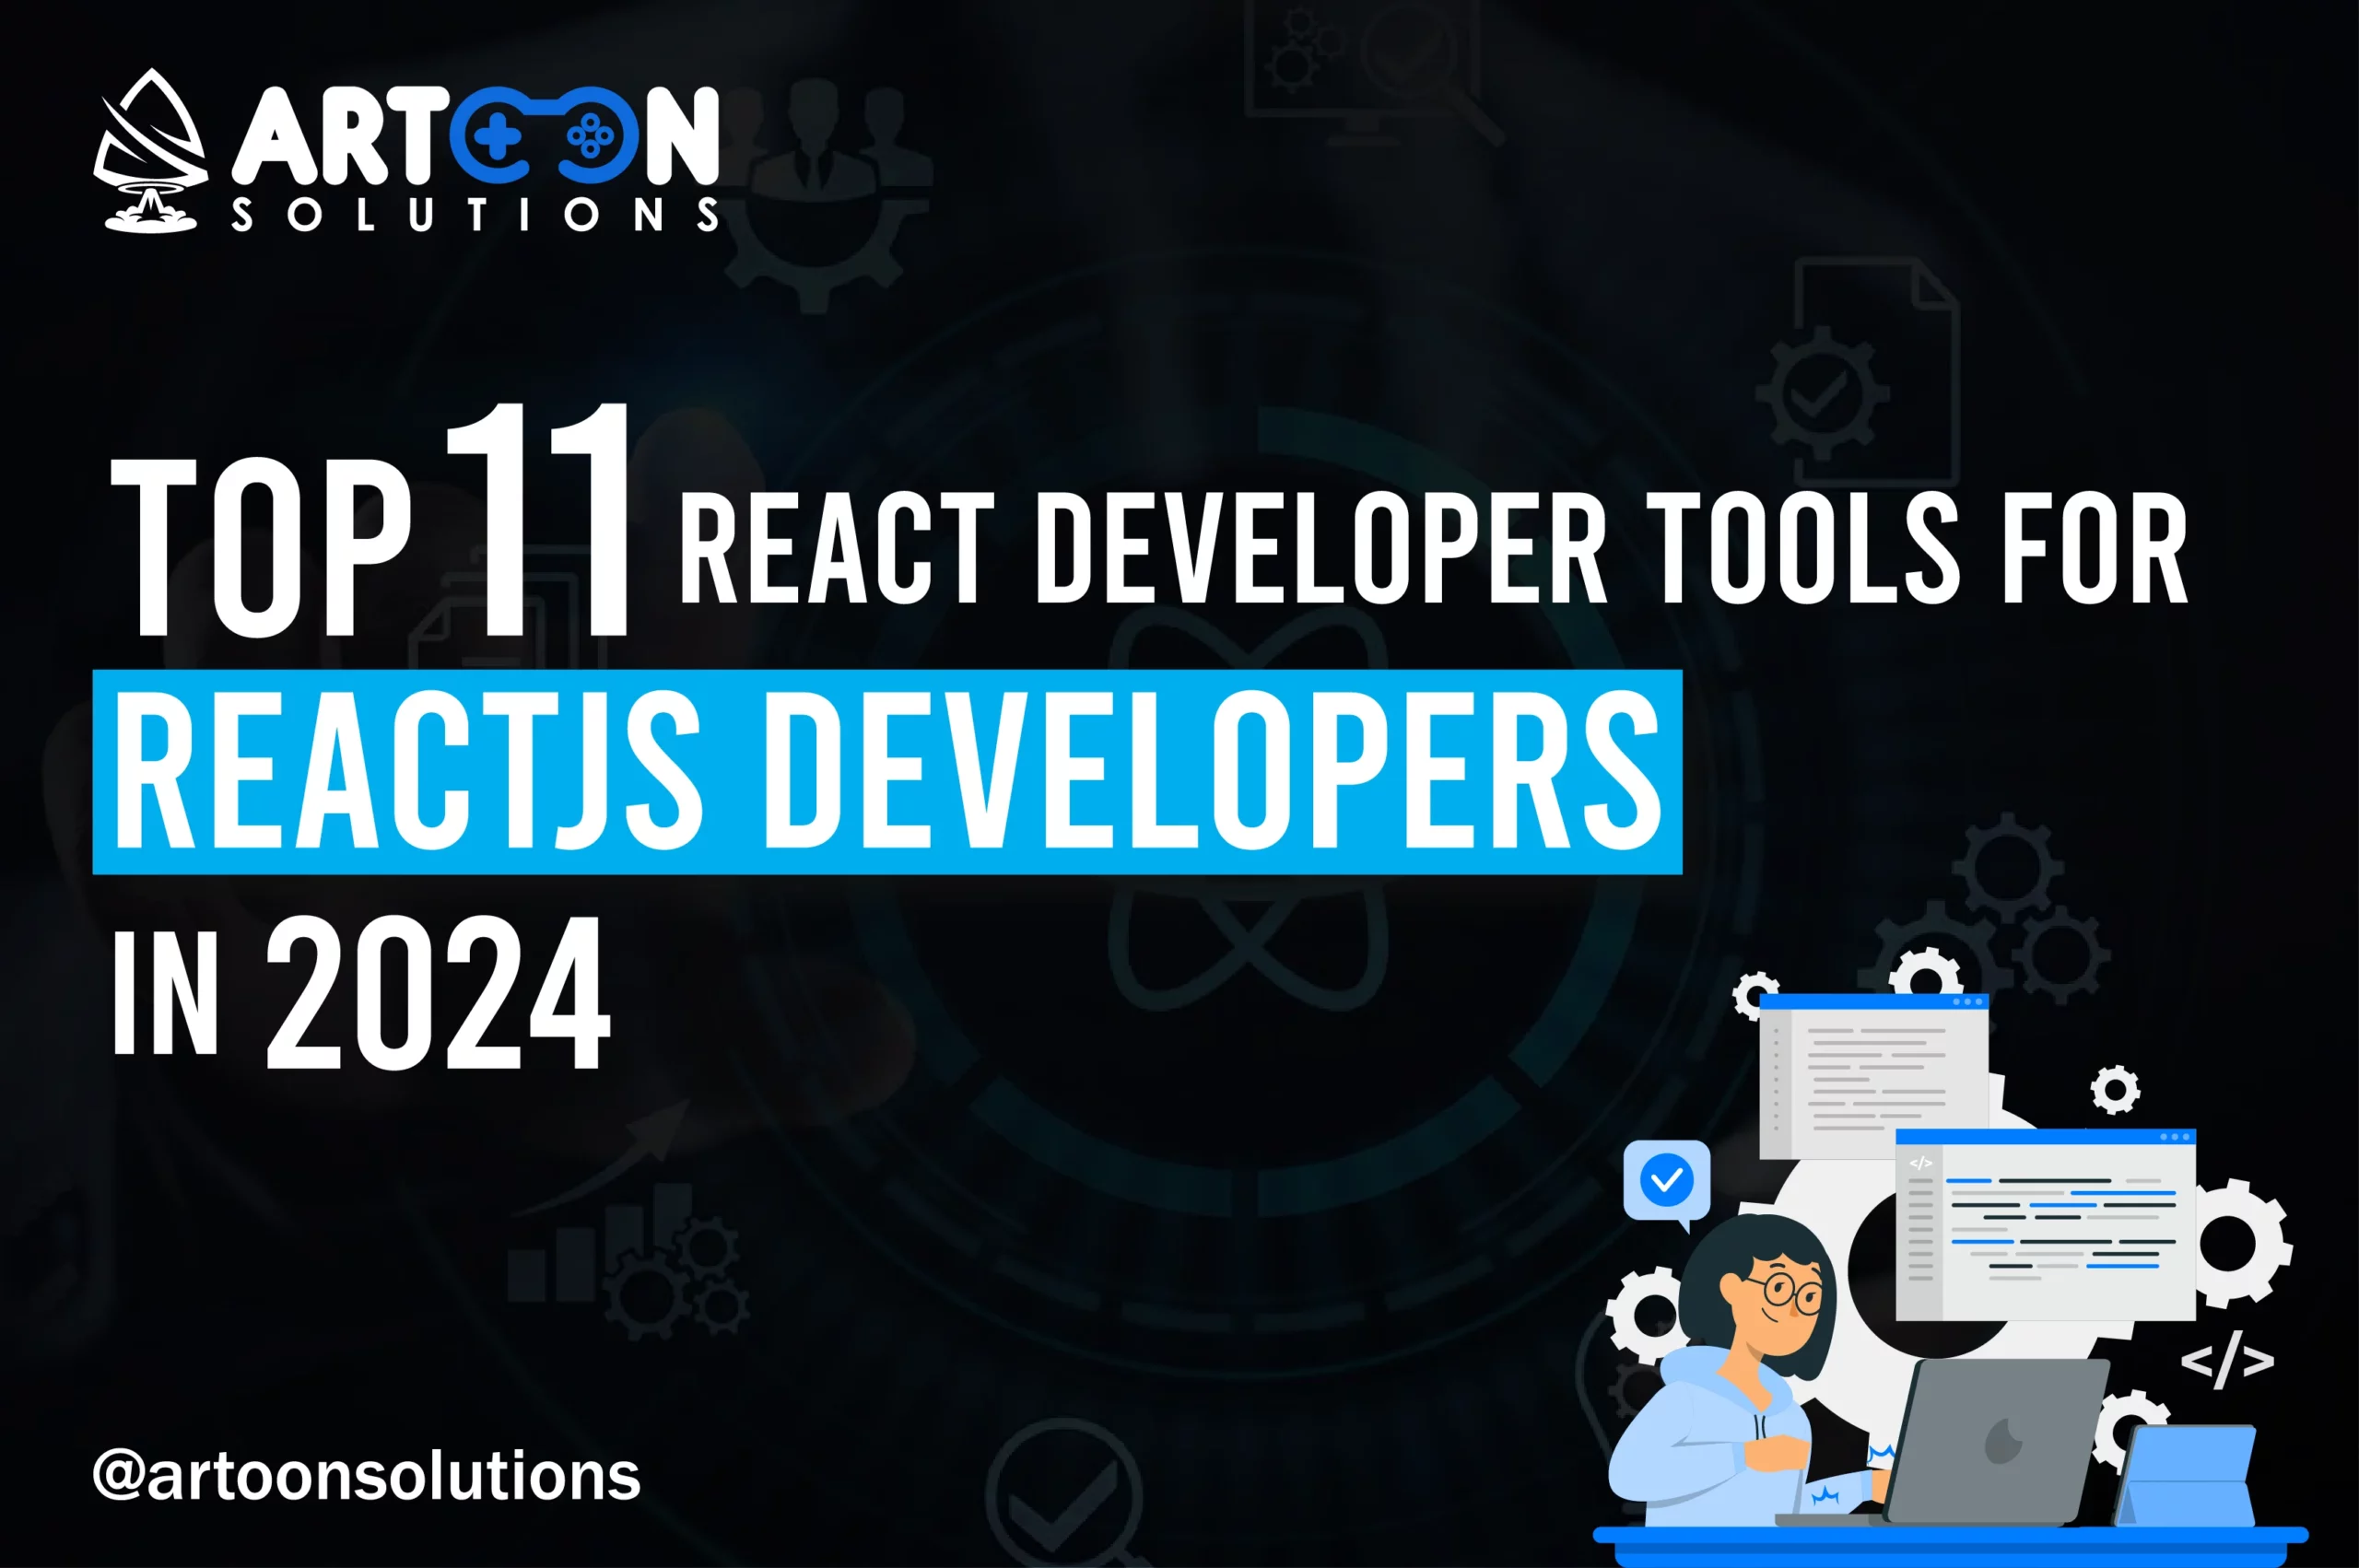 Top 11 React Developer Tools for Reactjs Developers in 2024